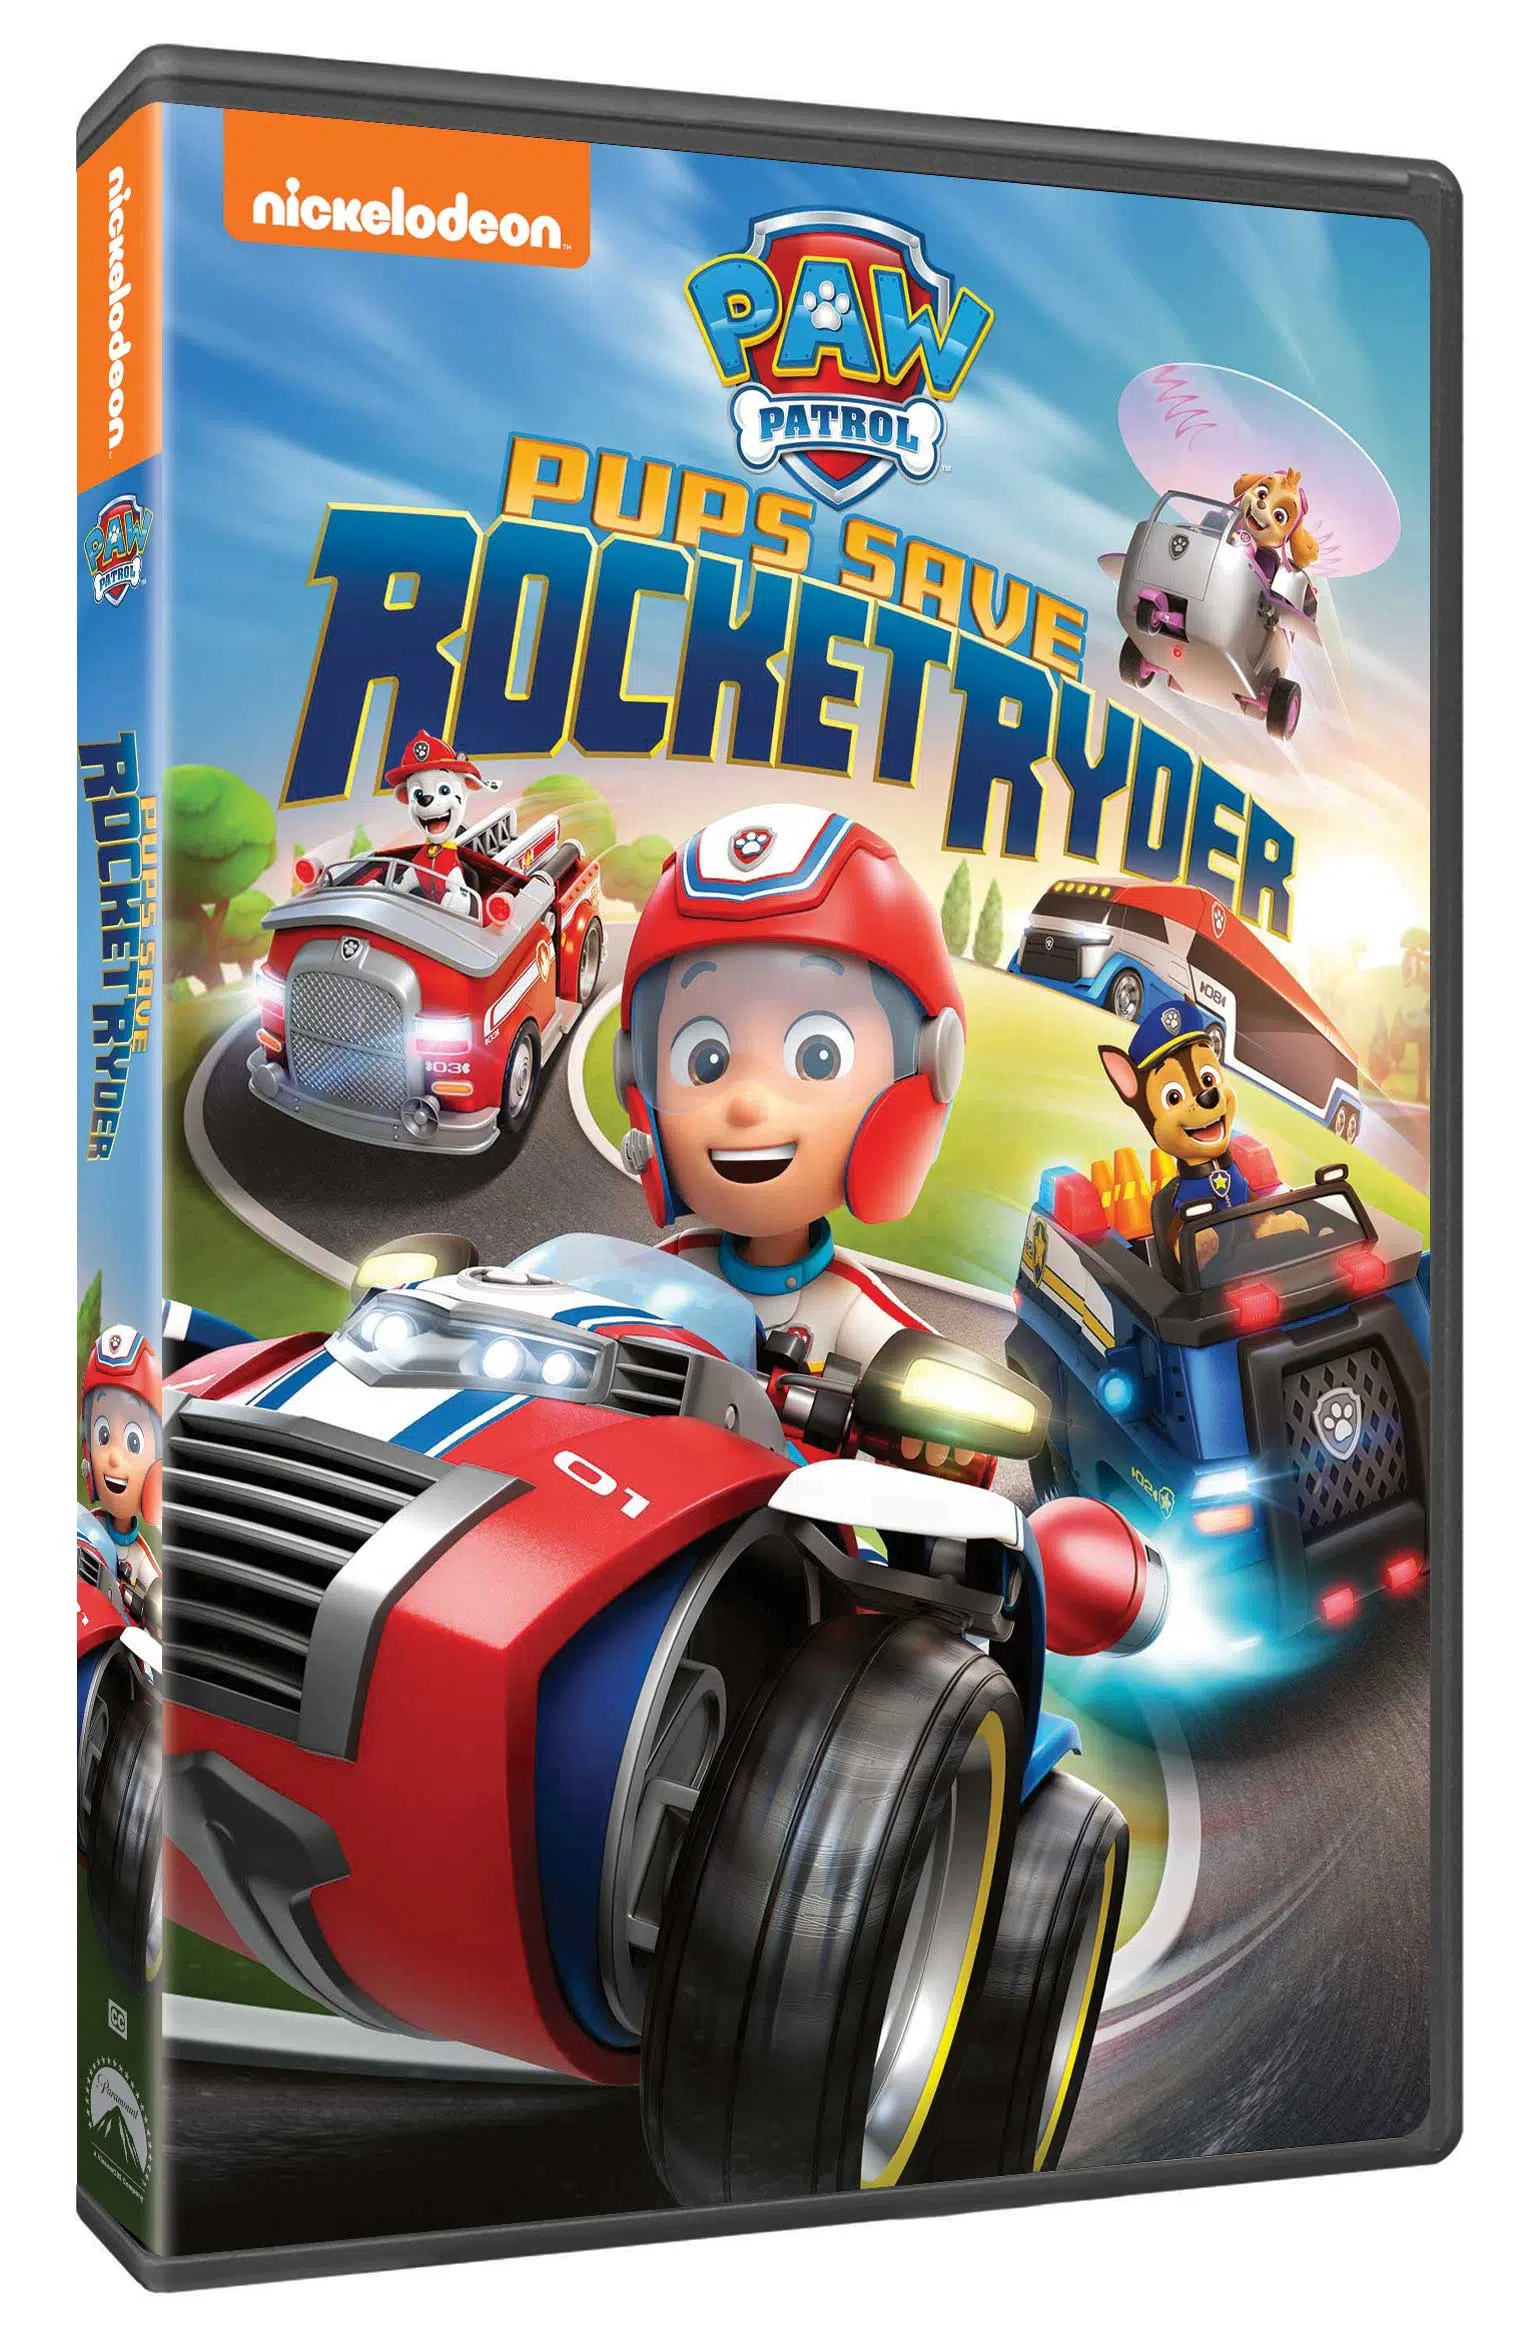 PAW Patrol Pups Save Rocket Ryder DVD Cover Art